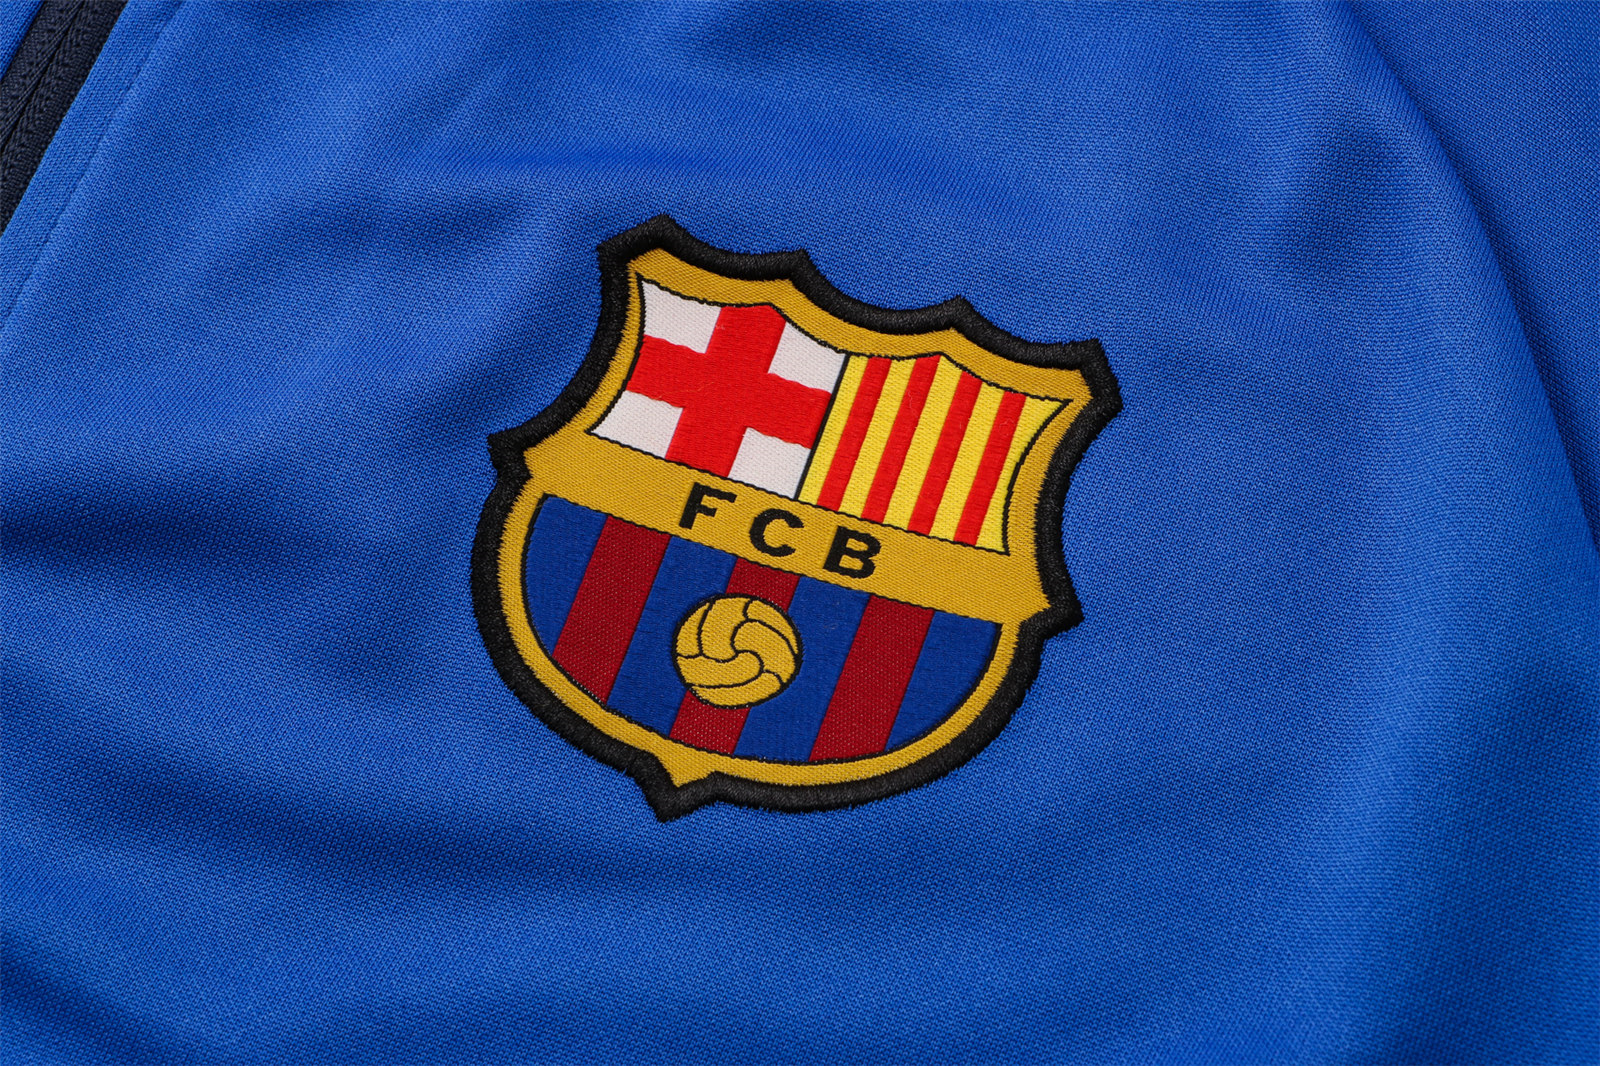 Barcelona Soccer Training Suit Jacket + Pants Blue BRB Men's 2021/22